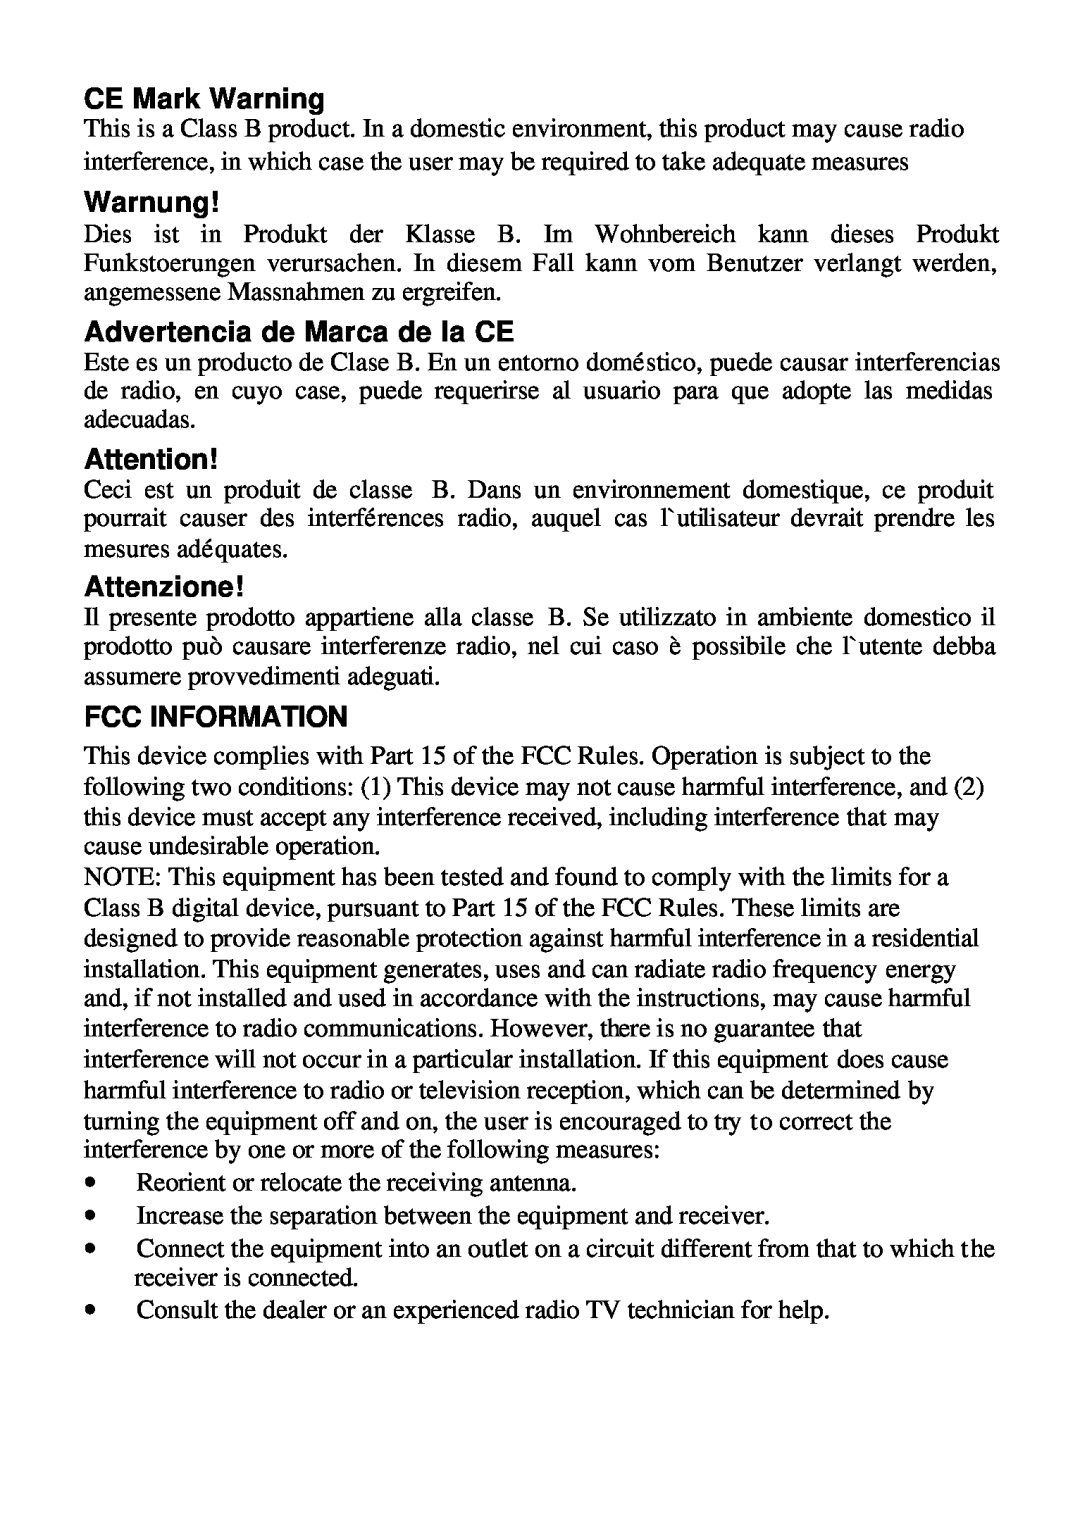 D-Link DMP-CD100 user manual CE Mark Warning, Warnung, Advertencia de Marca de la CE, Attenzione, Fcc Information 